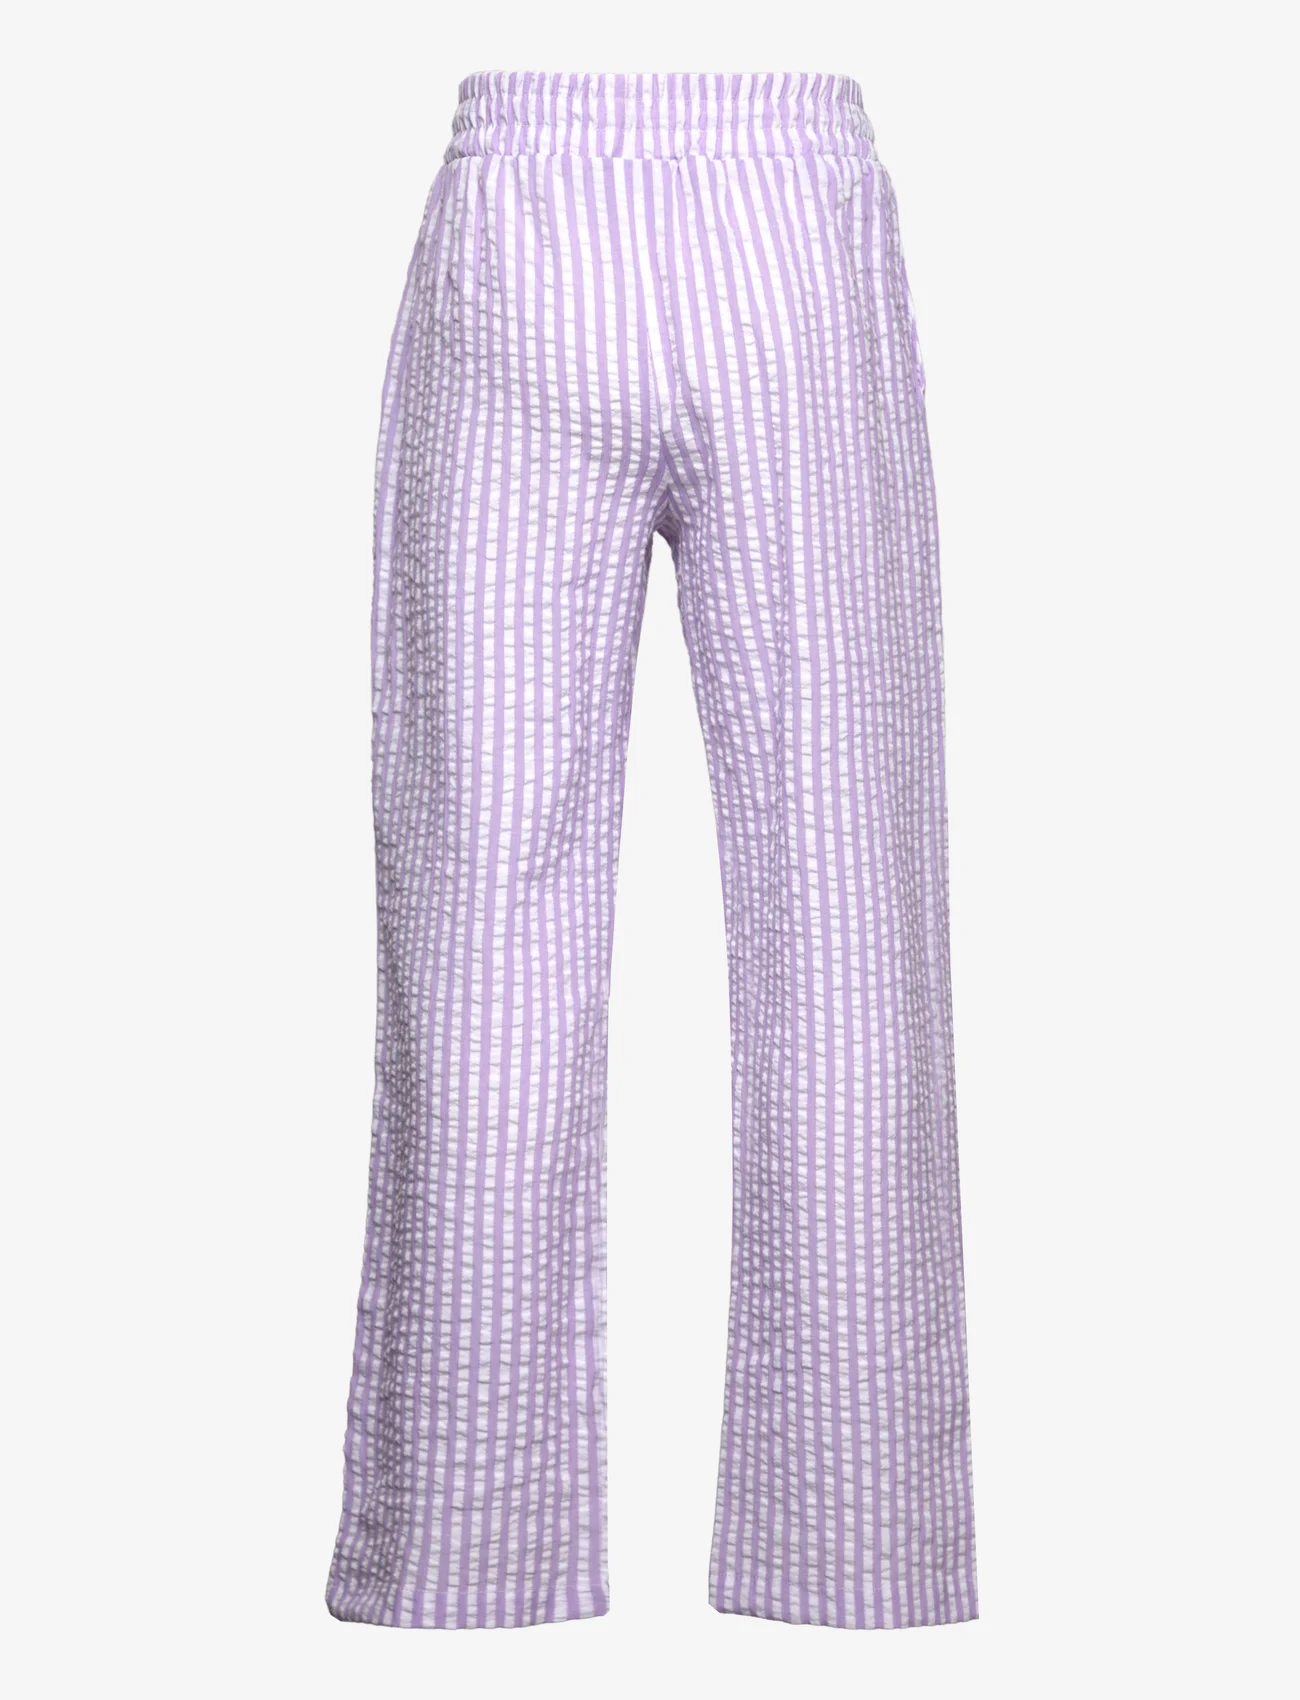 Grunt - Tenna Striped Pant - laveste priser - purple - 1